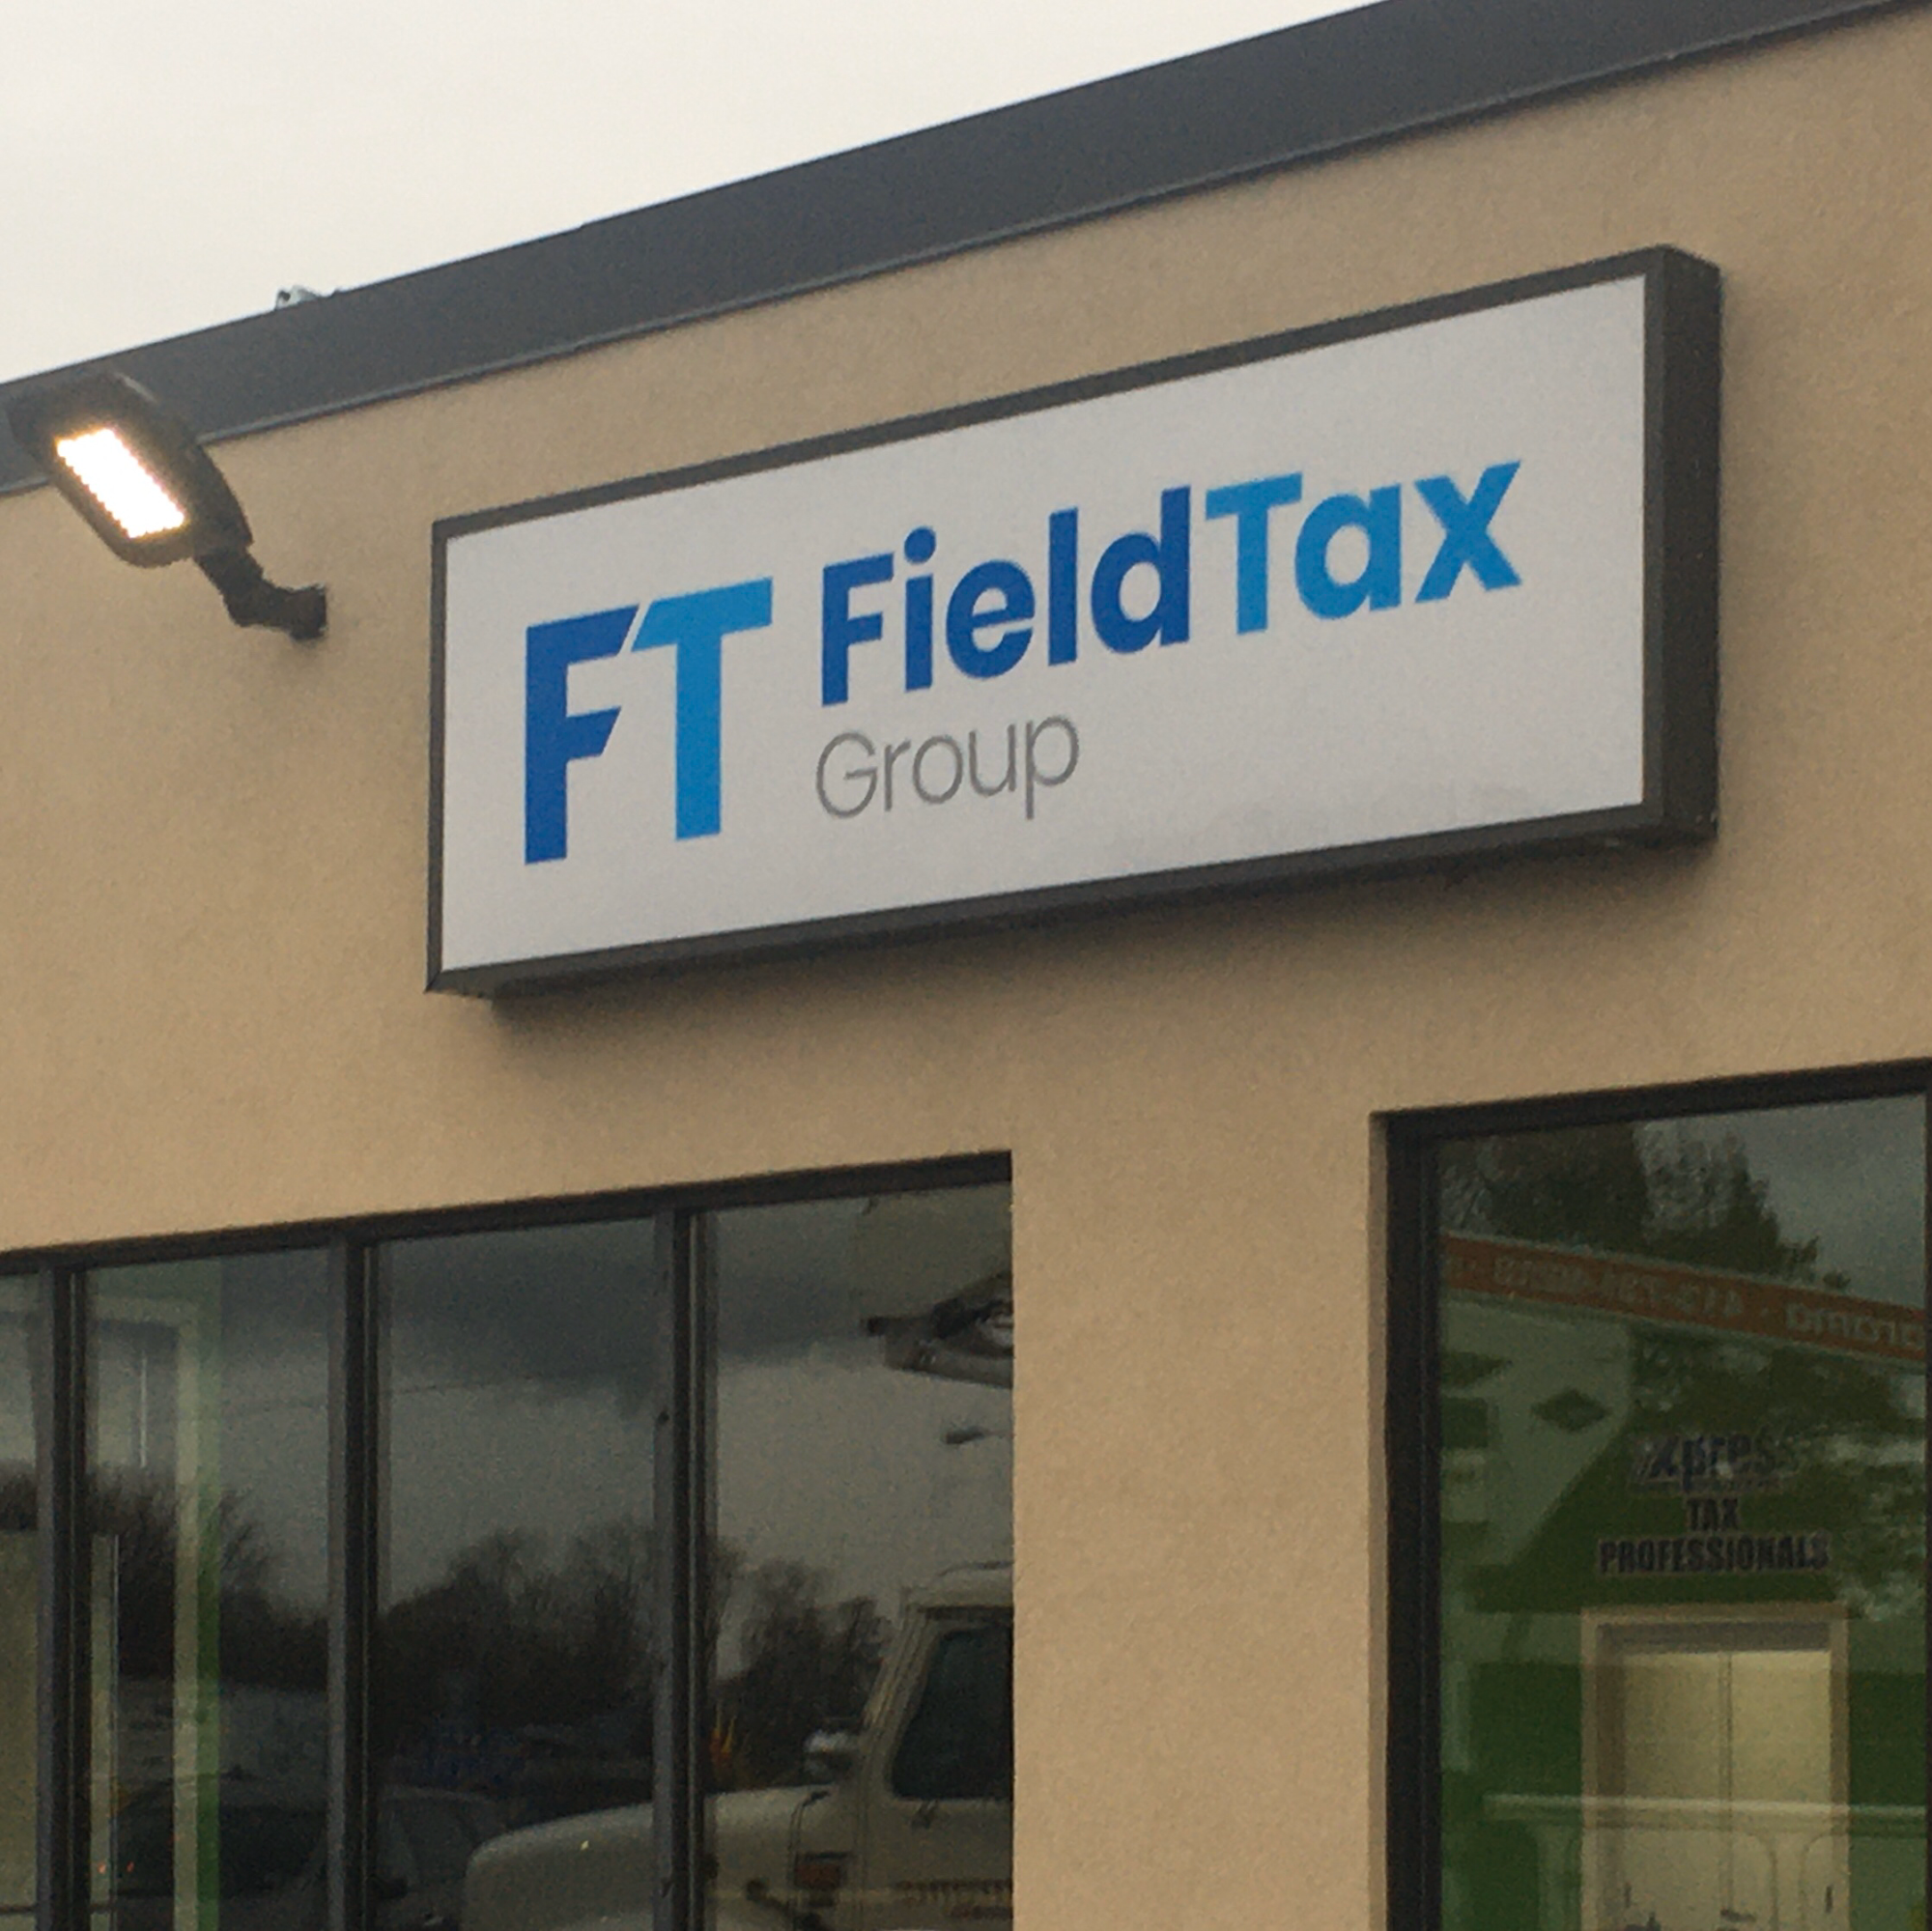 Field Tax Group